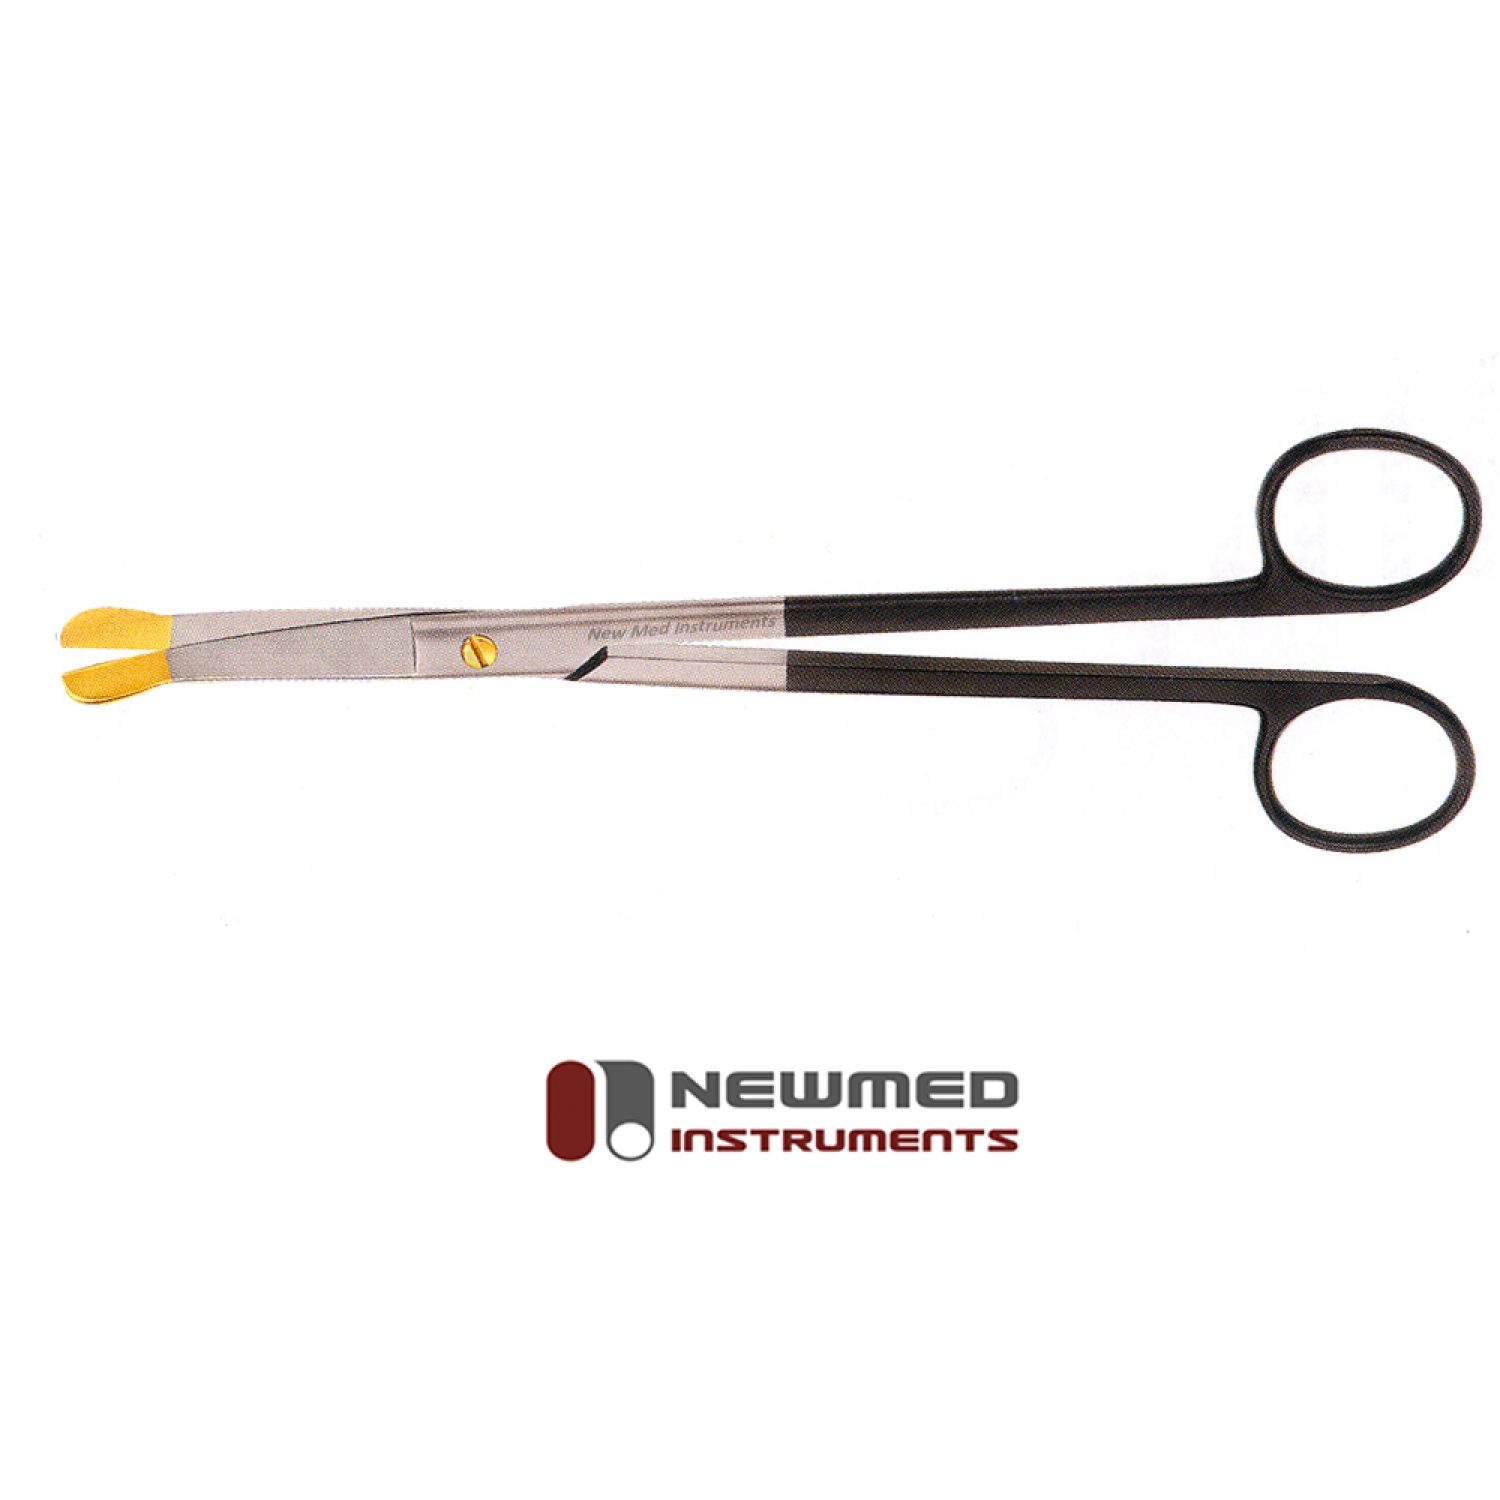 Westcott Stitch Scissors - Curved Sharp Tips